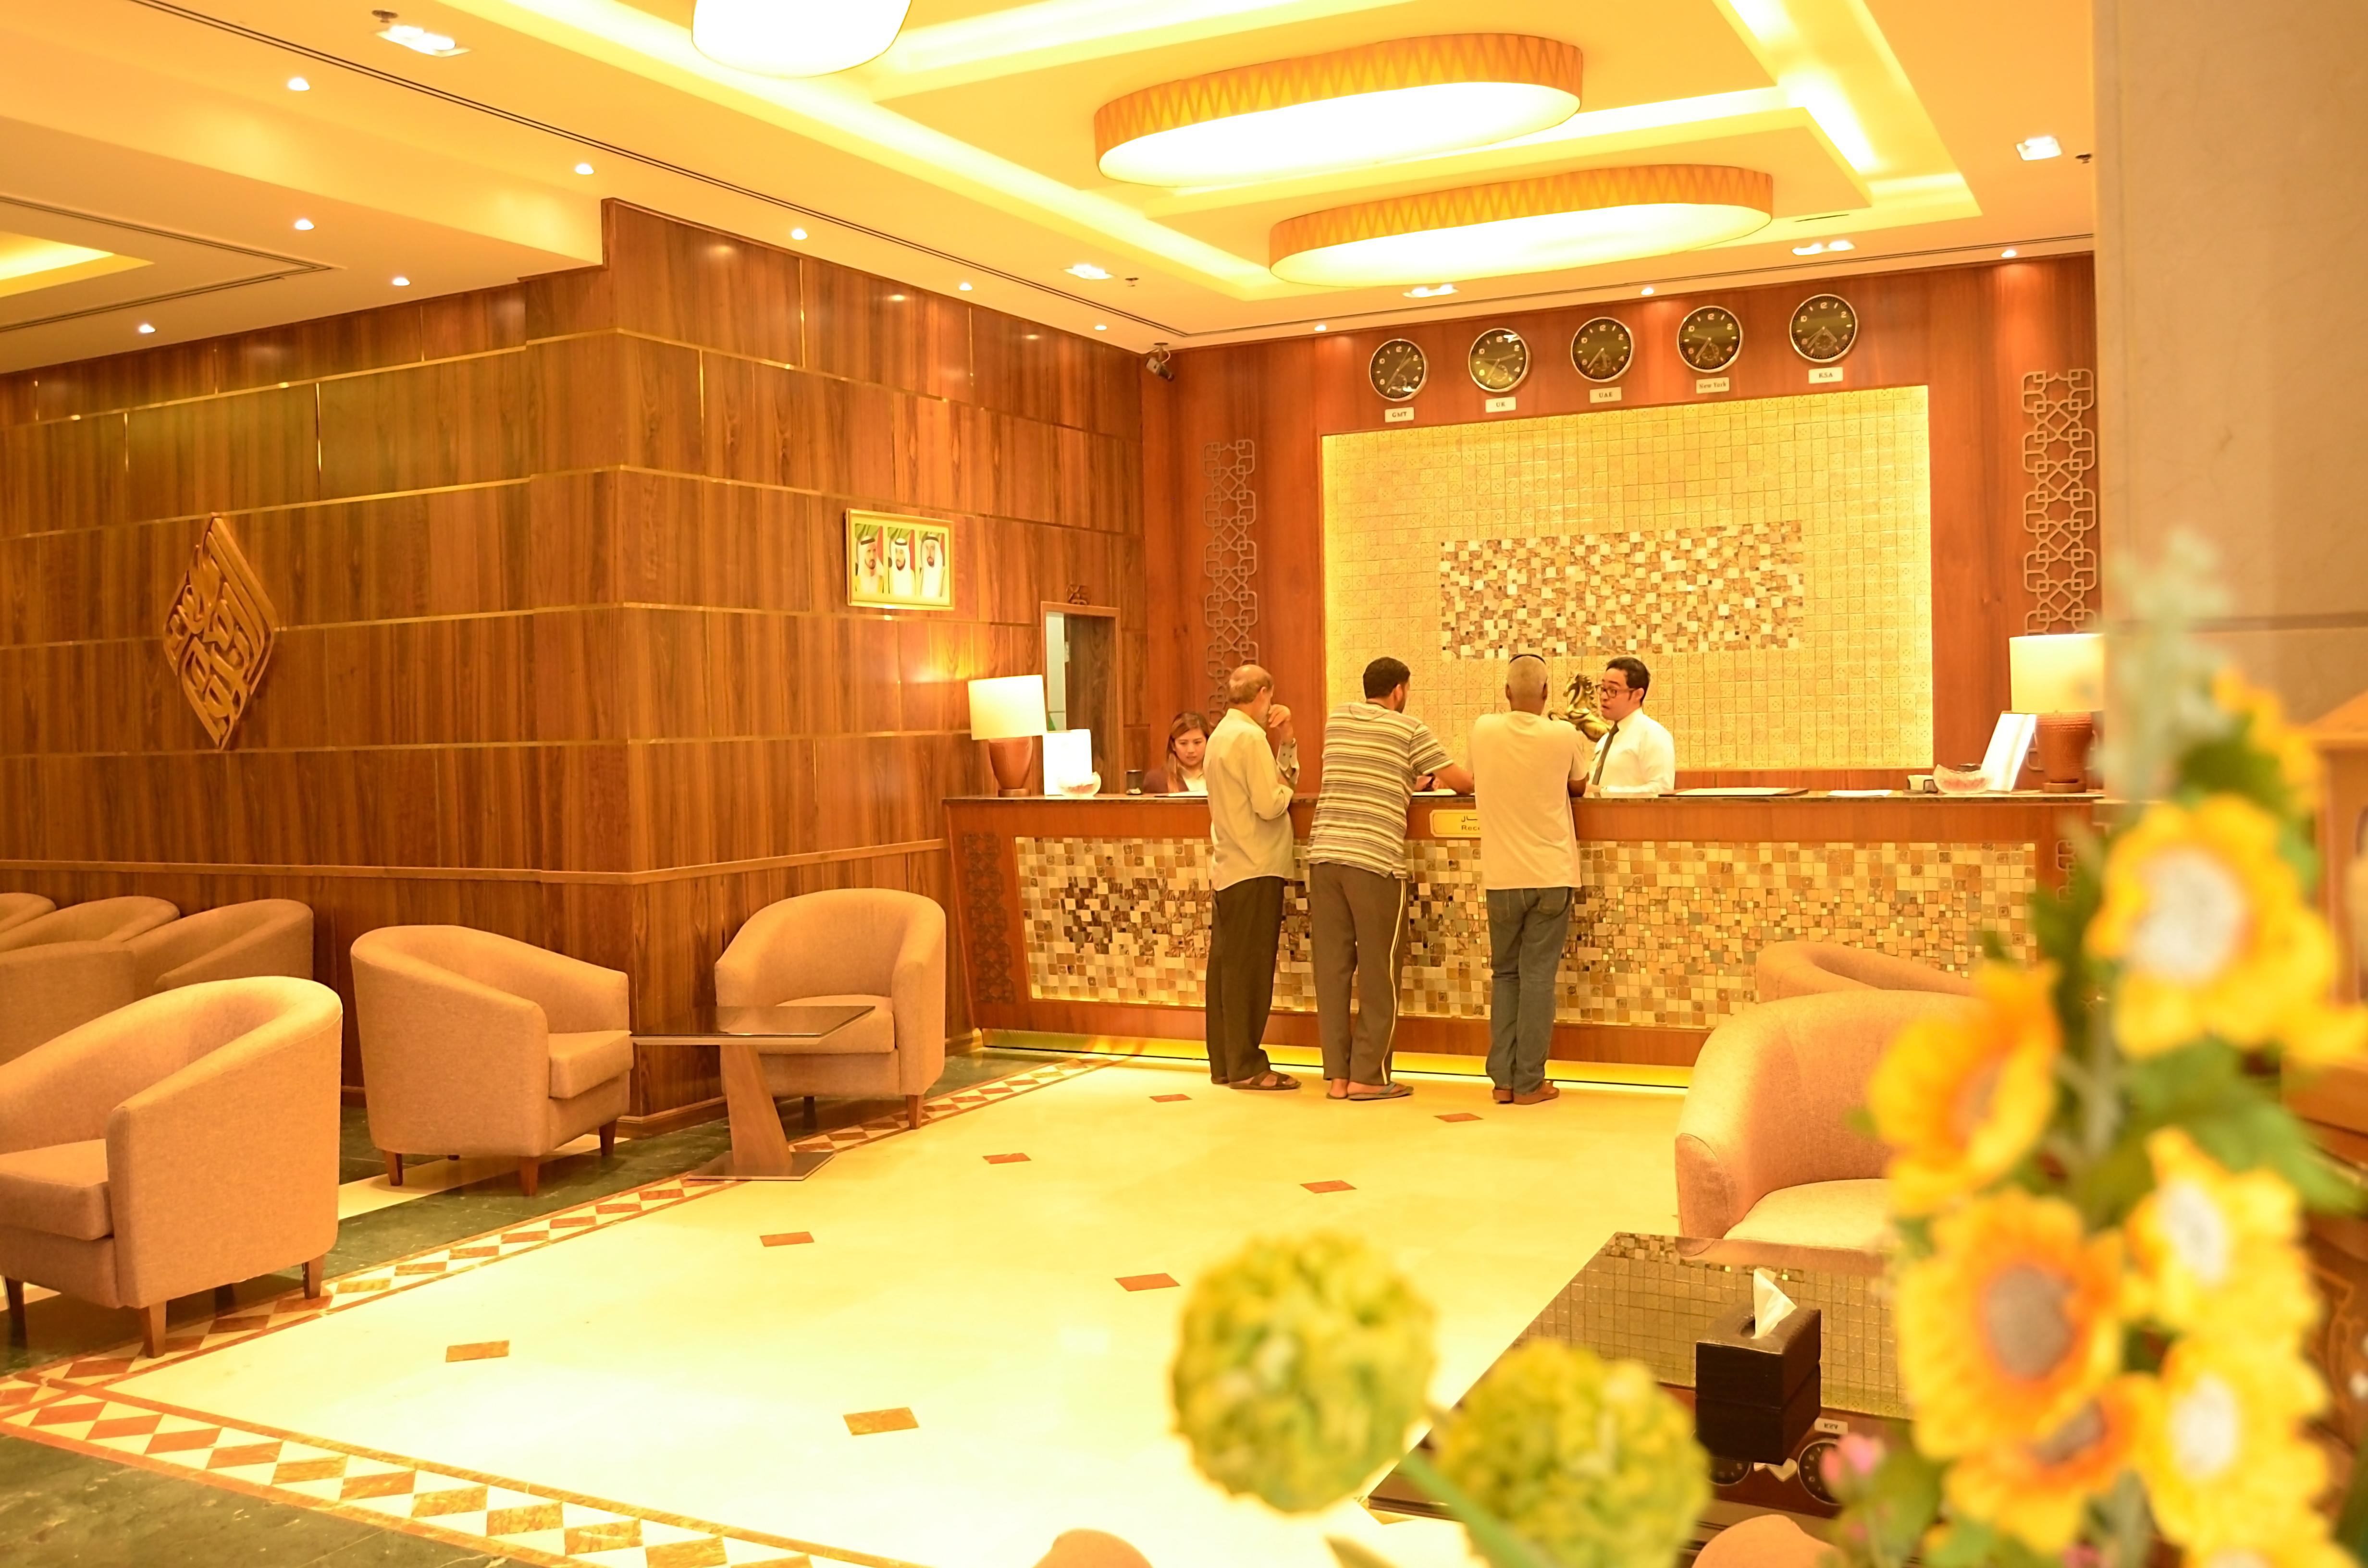 Nejoum Al Emarat Hotel Sharjah Exterior photo